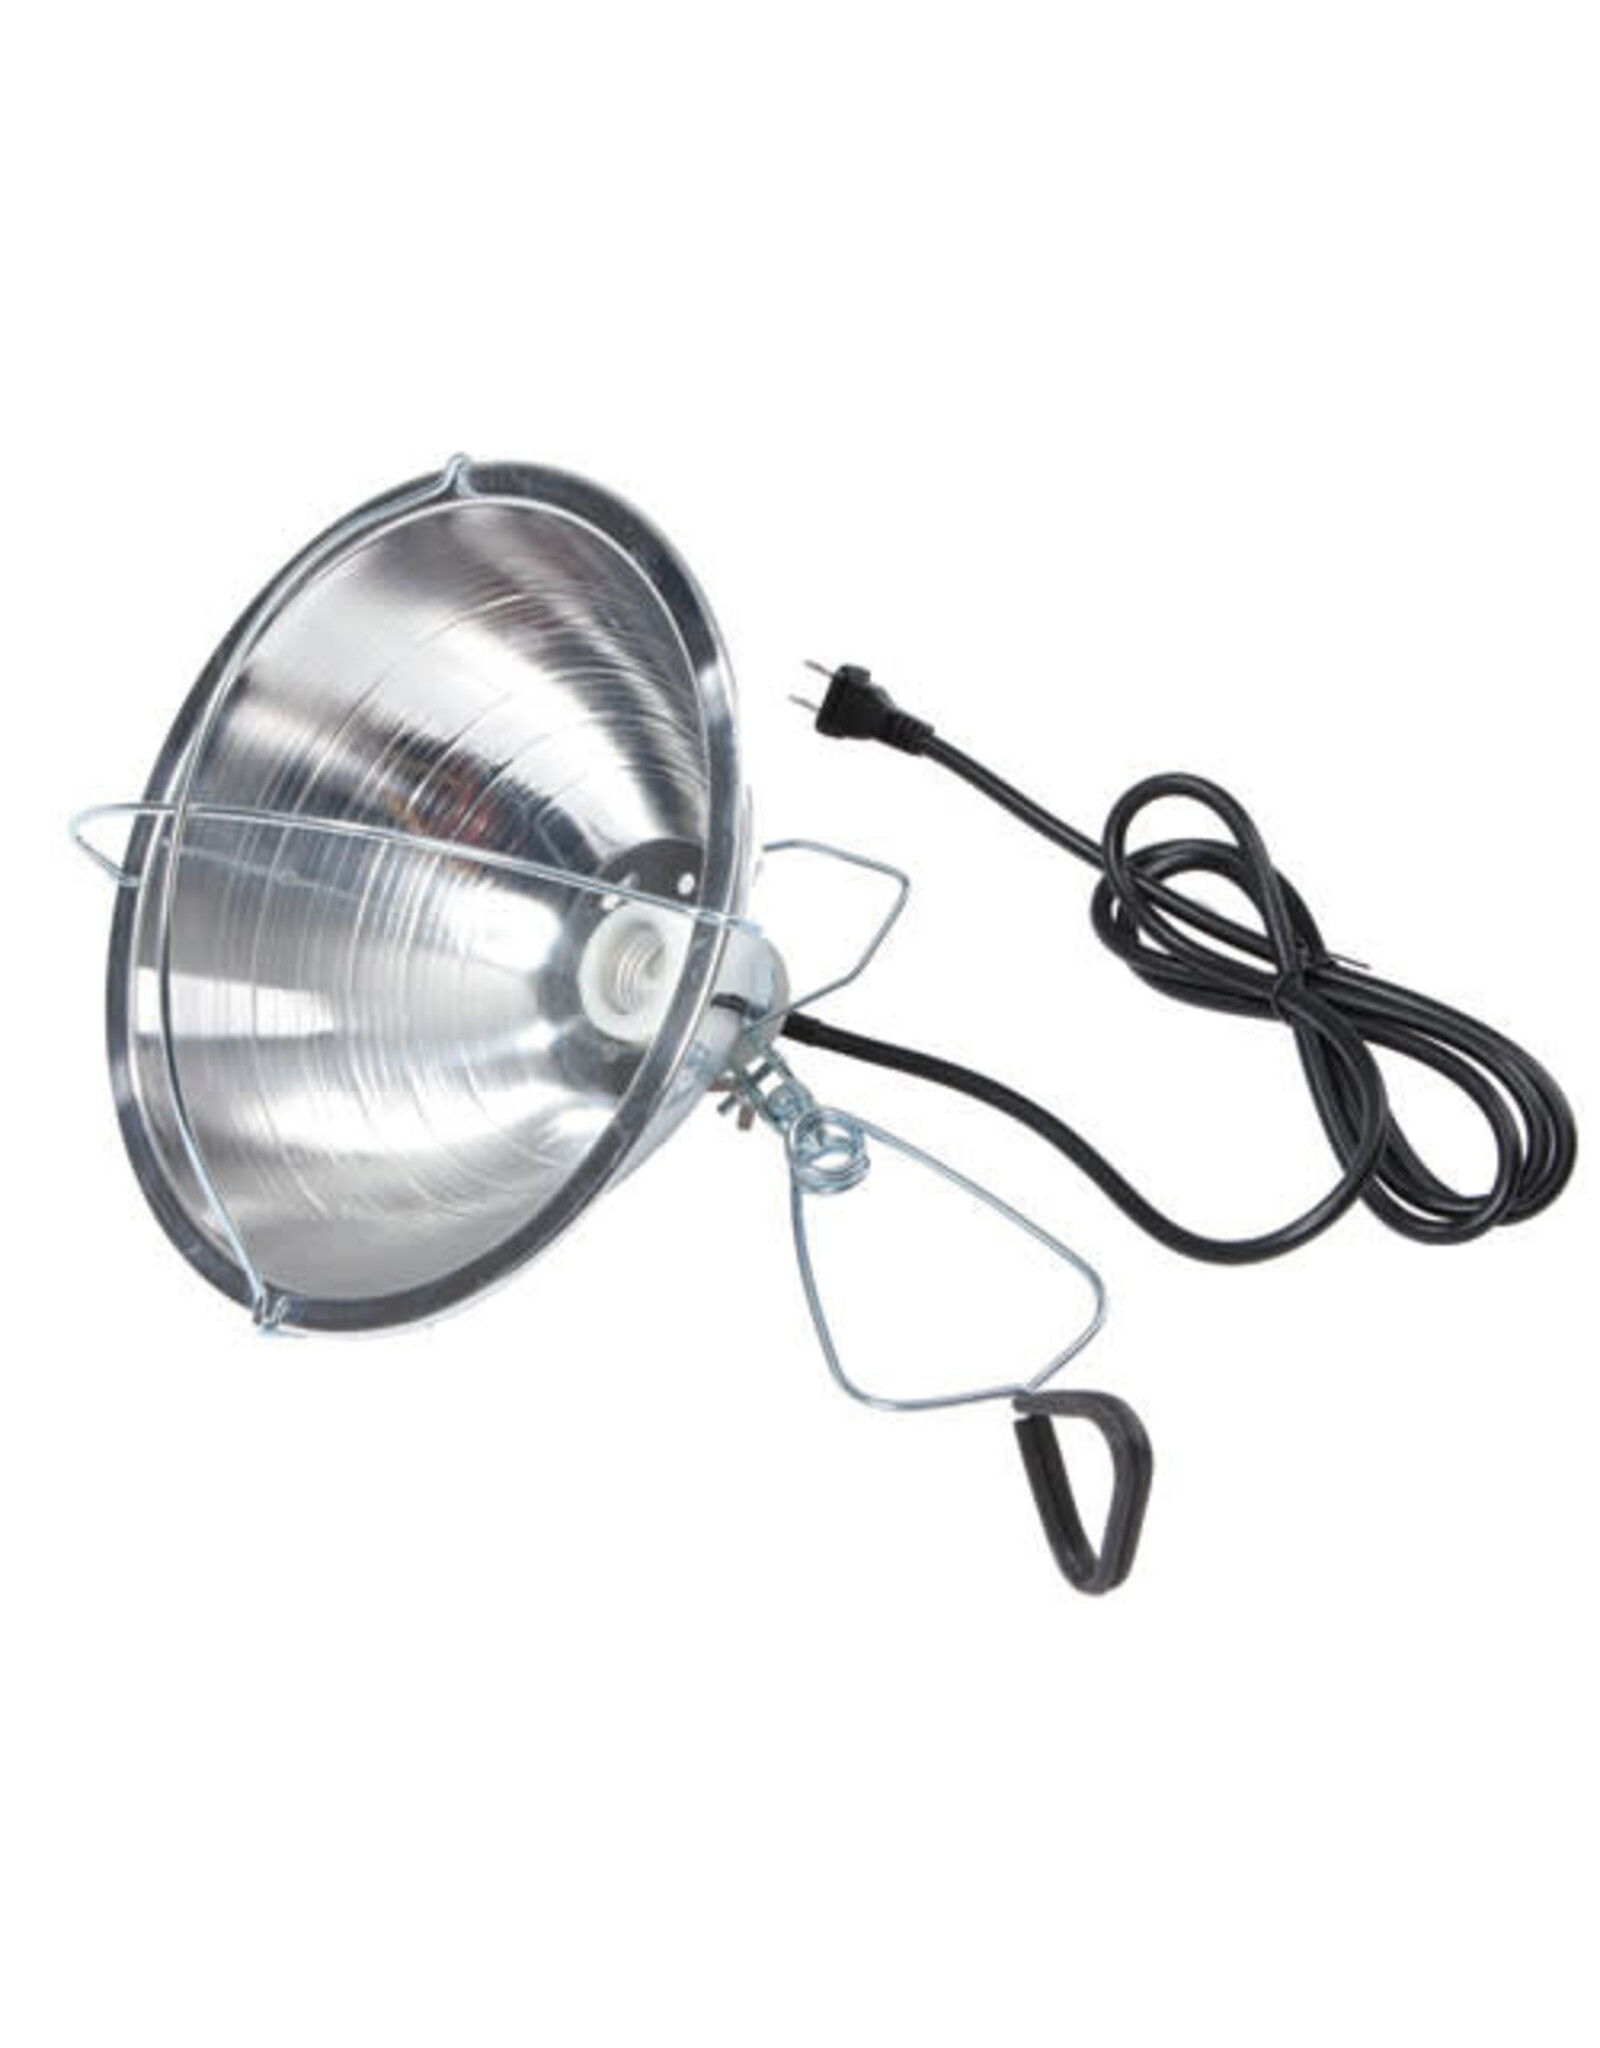 Little Giant Heat Lamp Brooder Reflector 10.5"